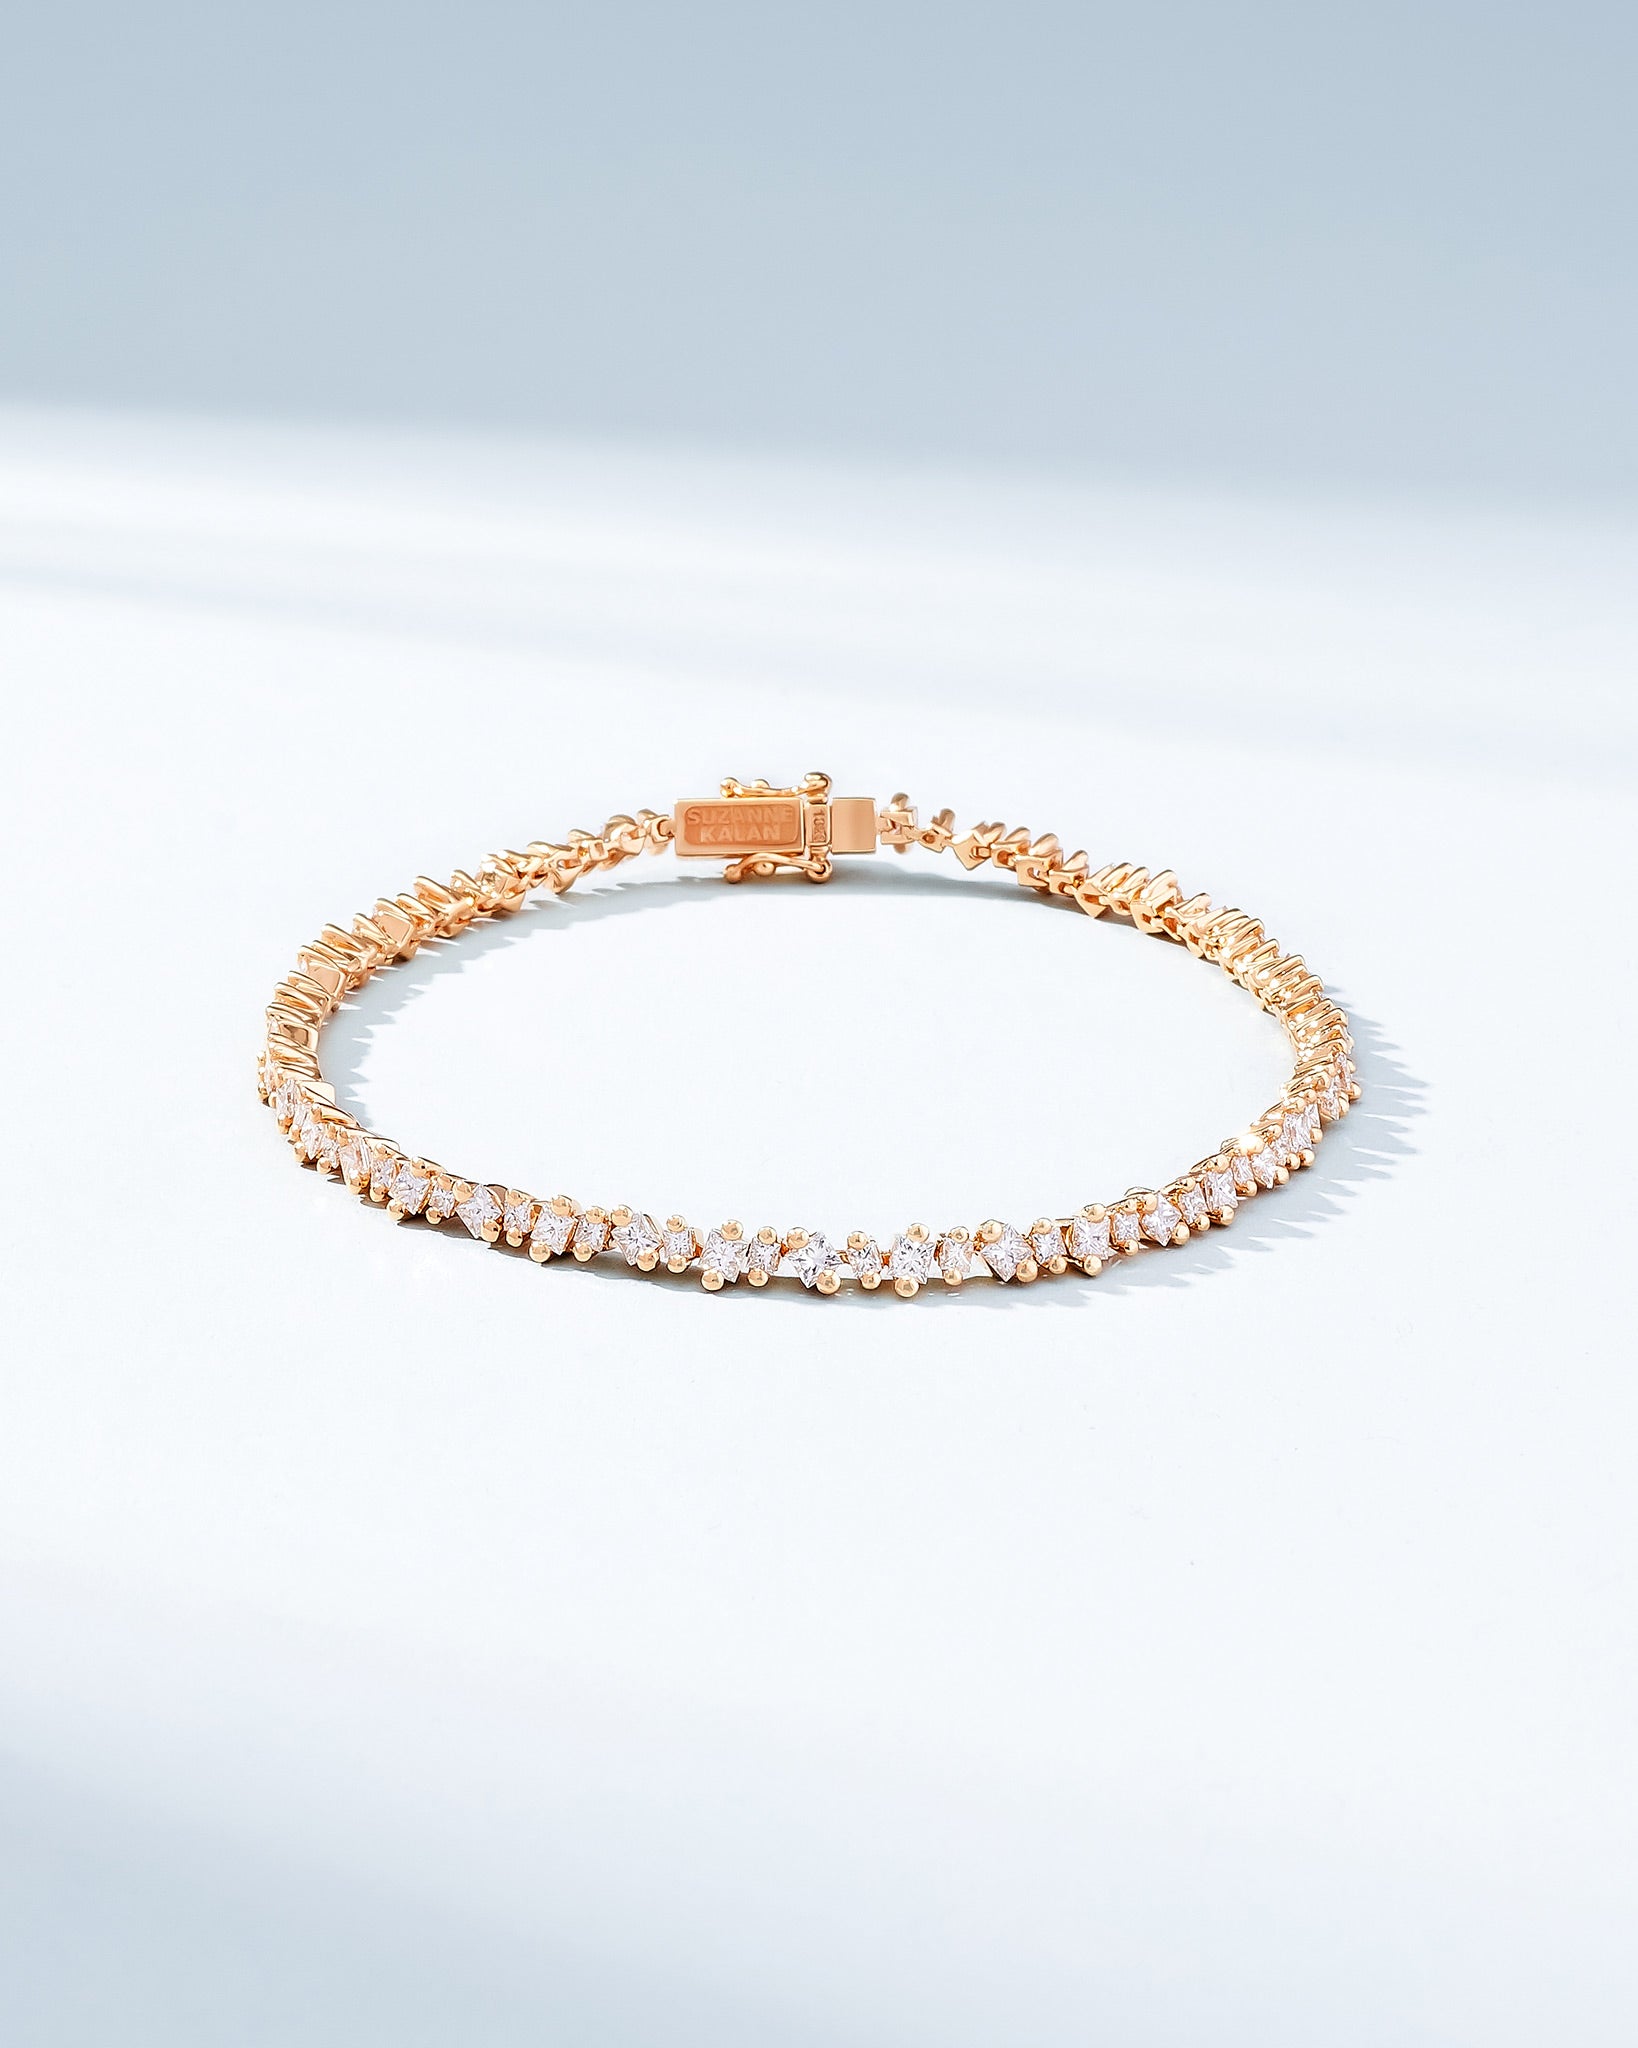 Suzanne Kalan La Fantaisie Cosmic Diamond Tennis Bracelet in 18k rose gold